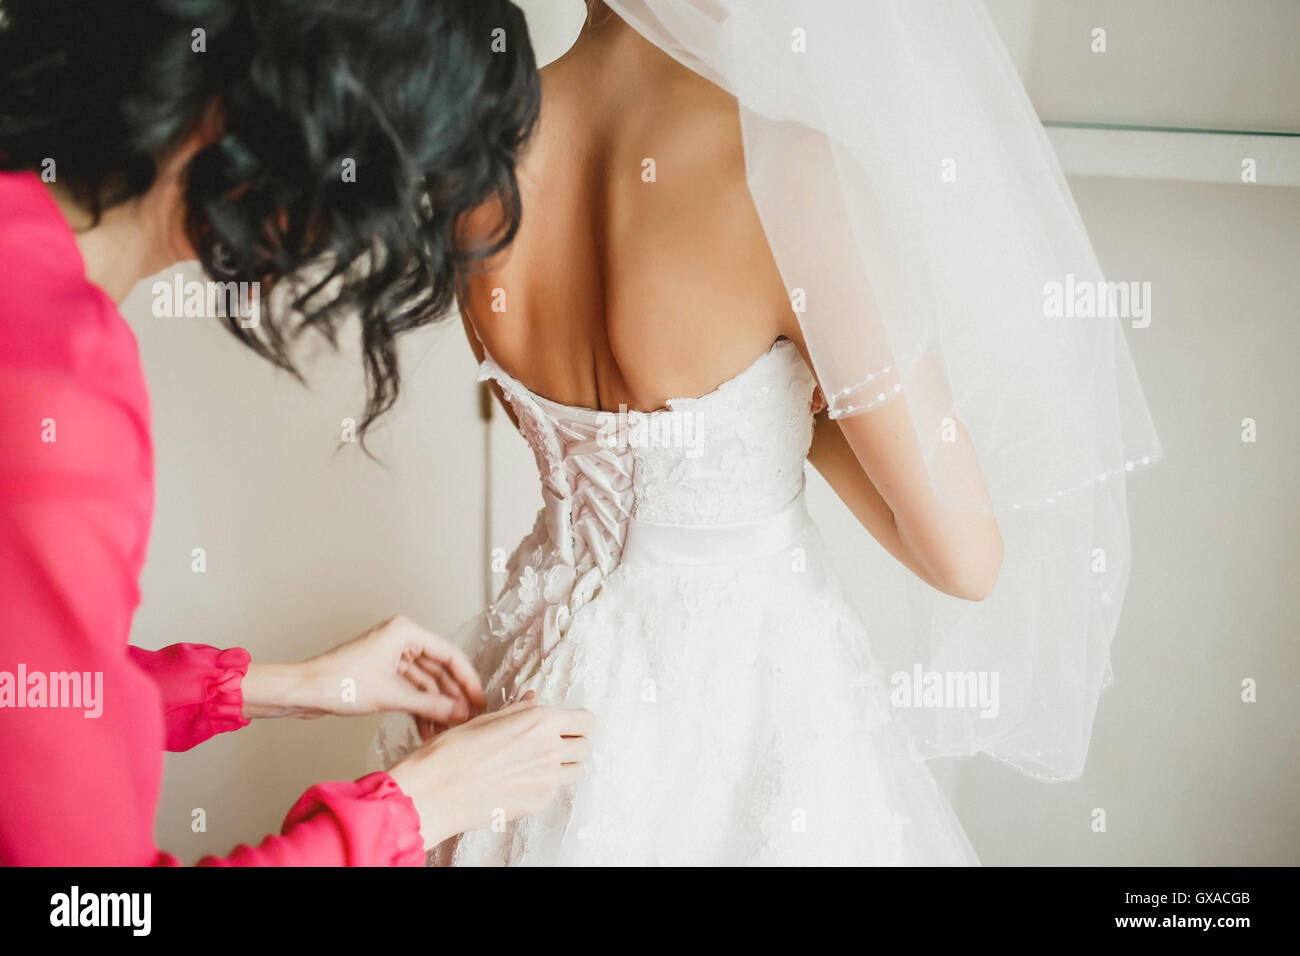 Bridesmaid ties a wedding dress to the bride. Stock Photo